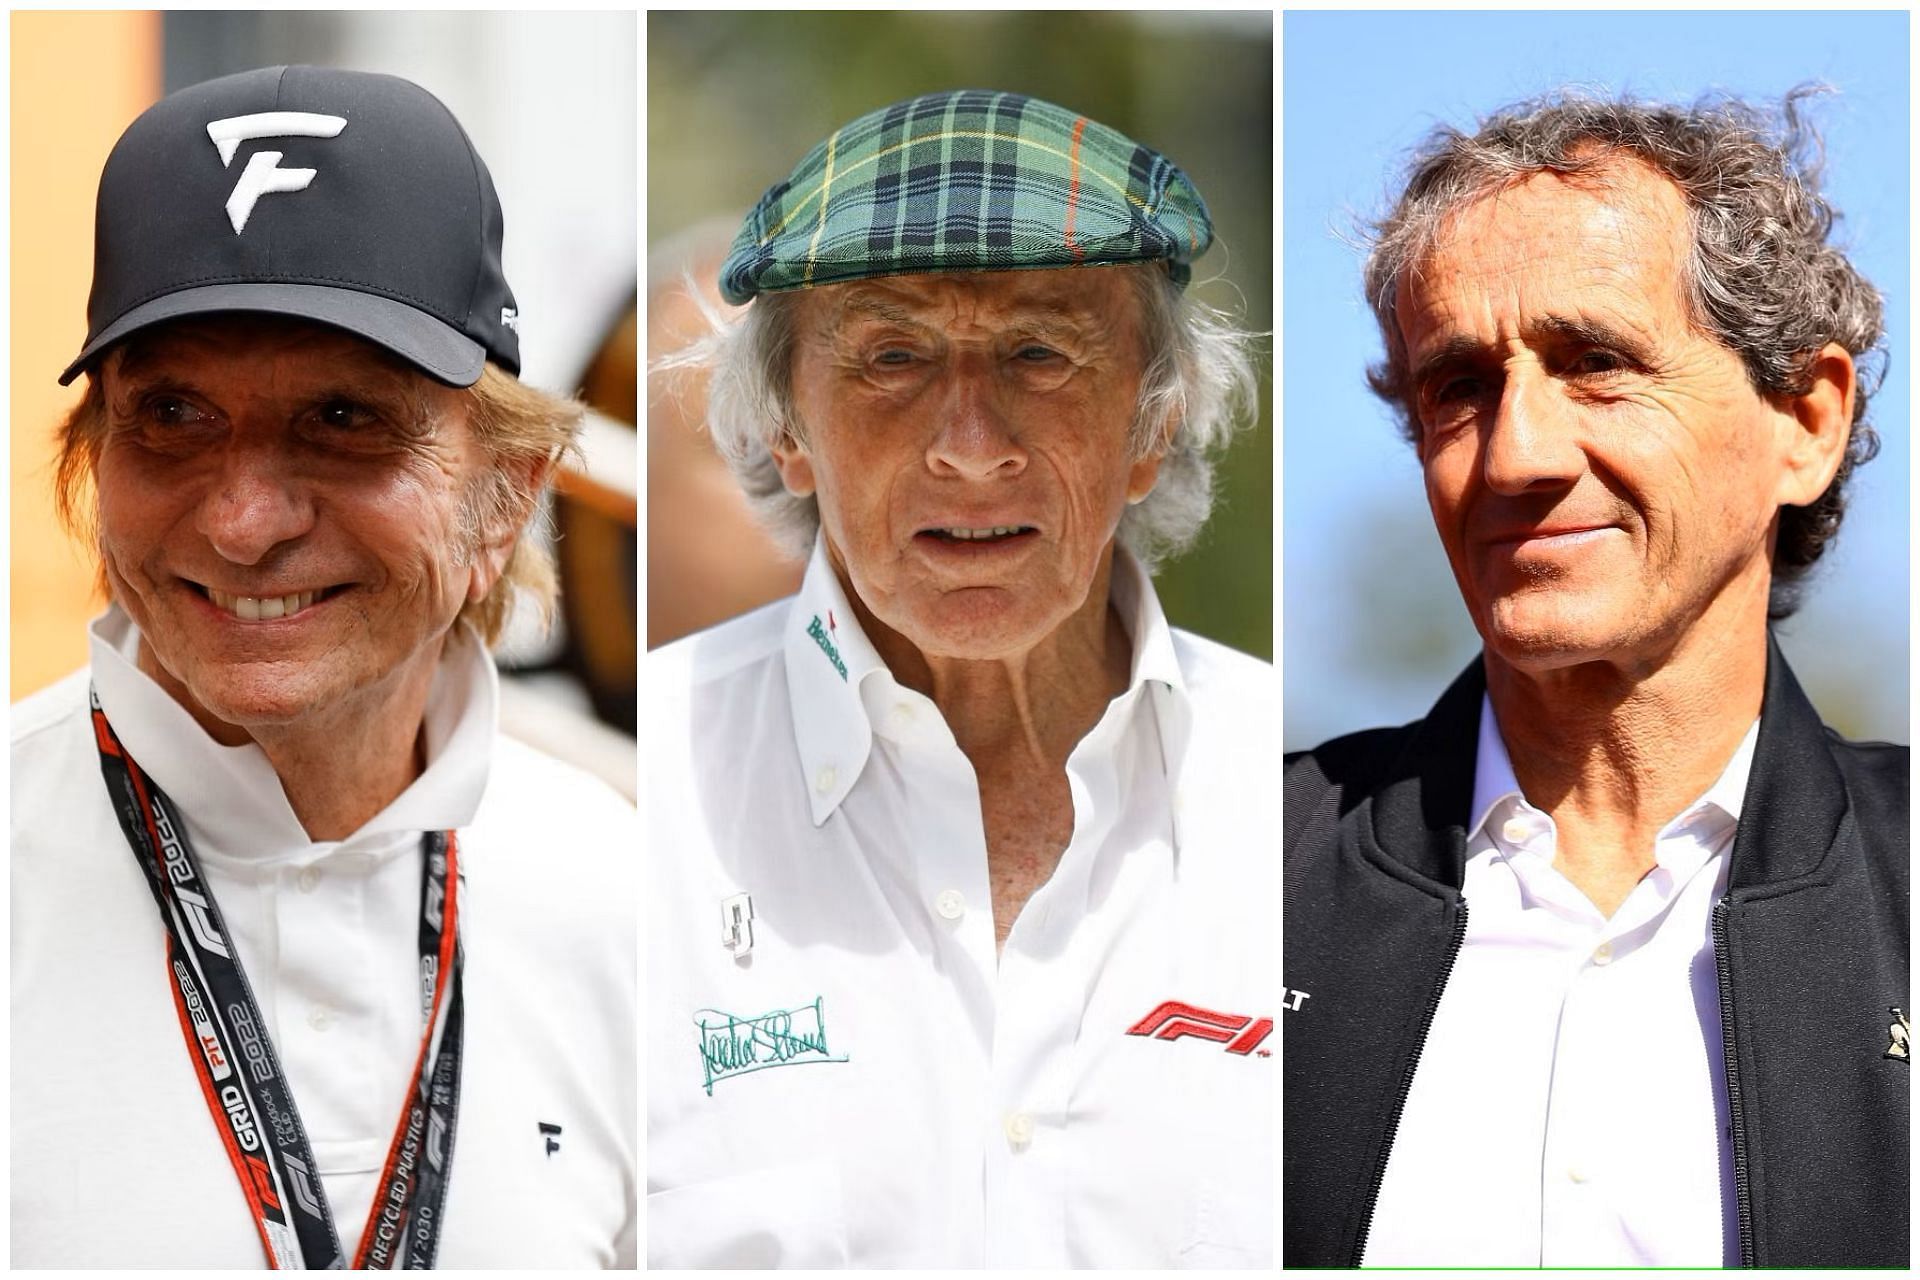 Emerson Fittipaldi (L), Jackie Stewart (C), and Alain Prost (R) (Collage via Sportskeeda)